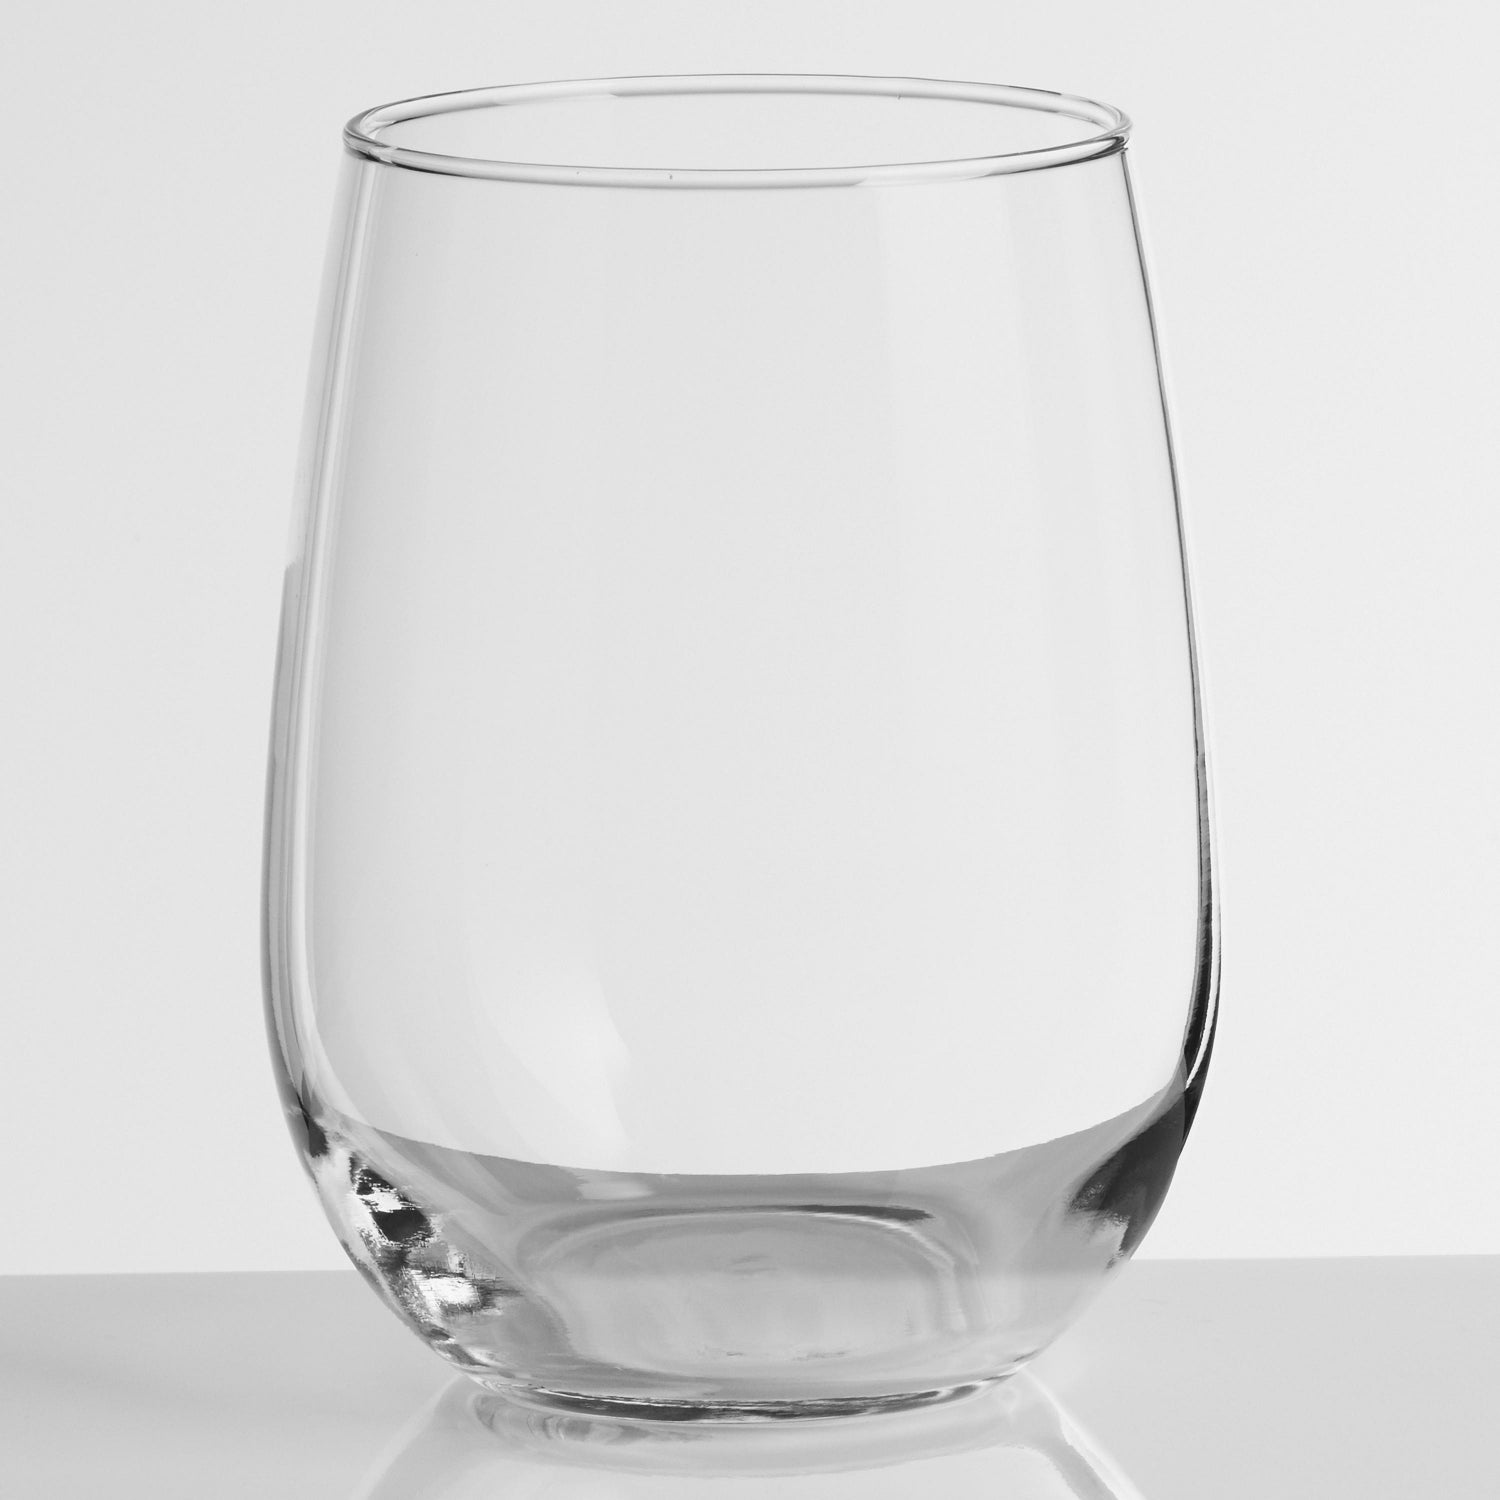 Stemless White Wine Glasses Set Of 4 Mrorganic Store